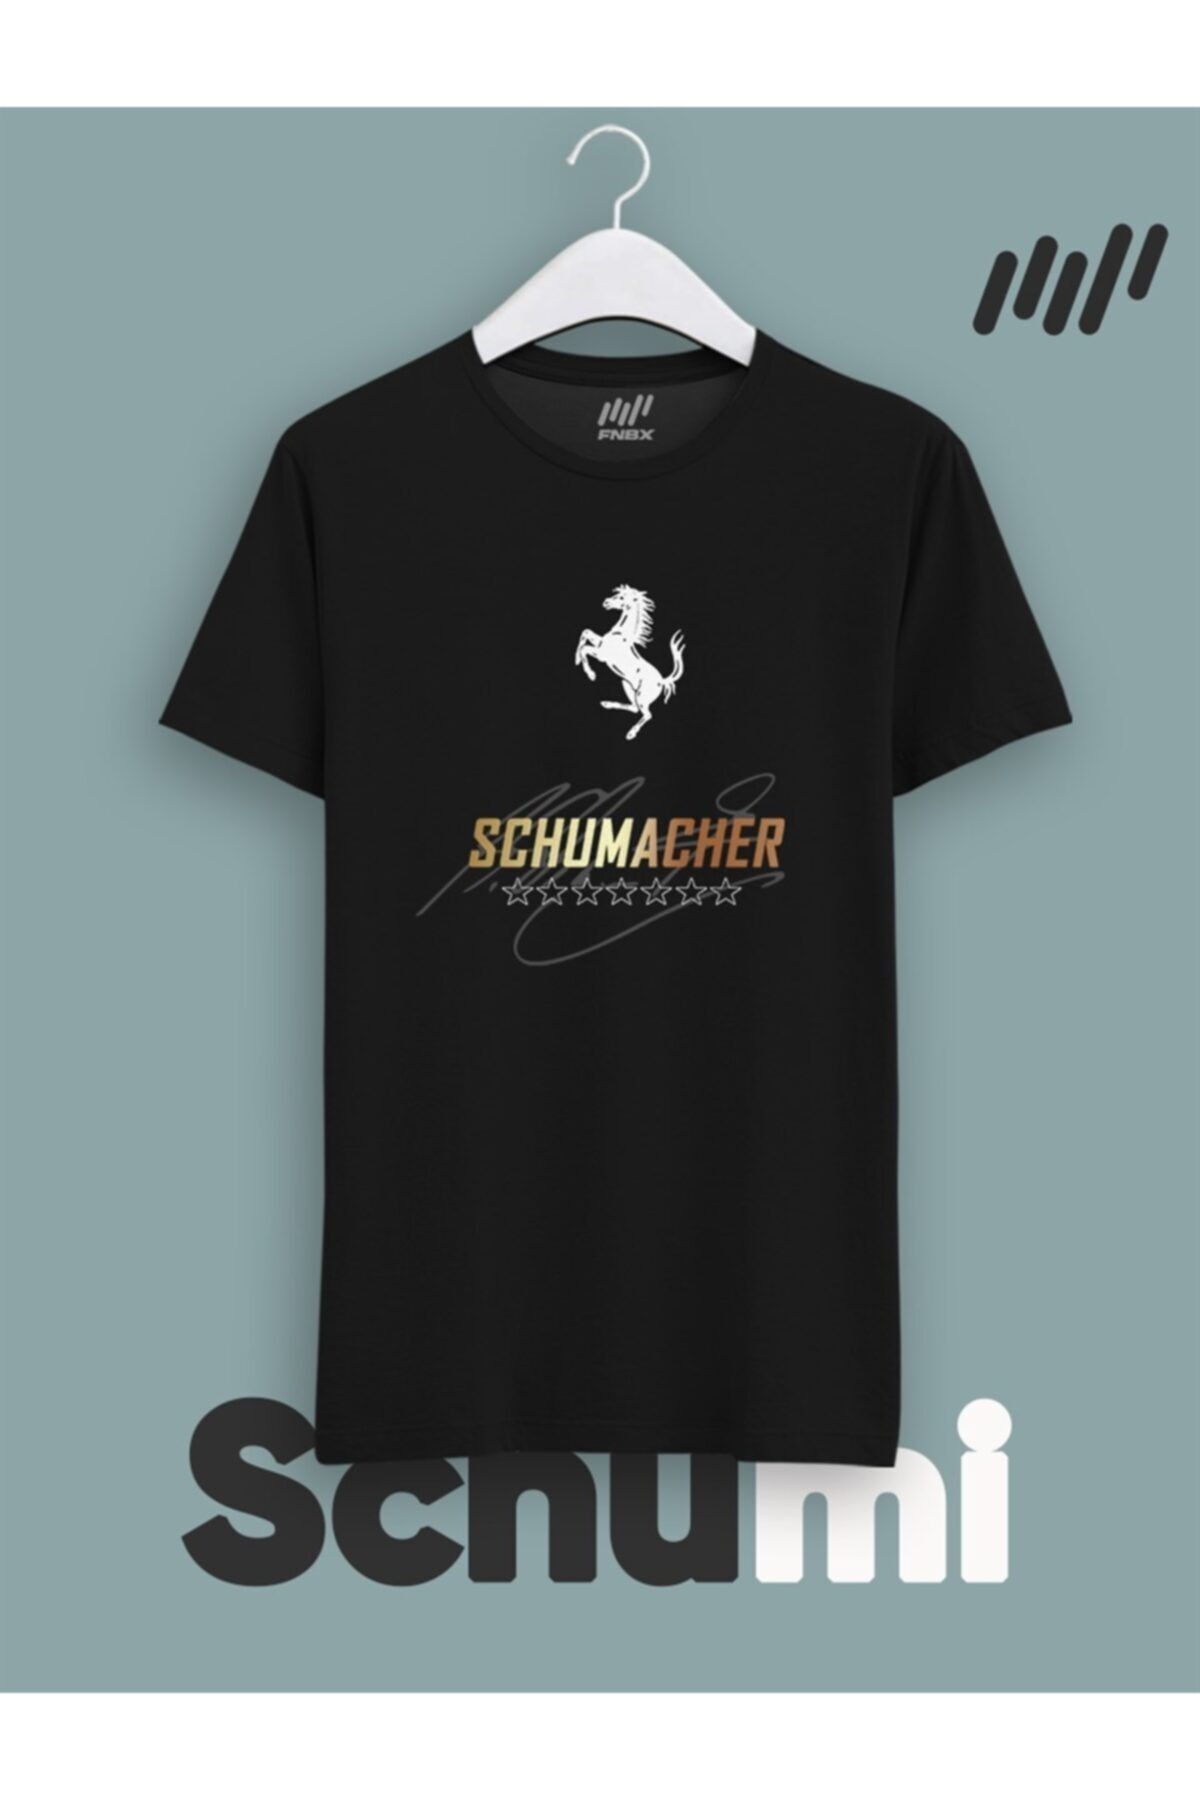 FANBOX SHOP Michael Schumacher Premium Altın Parlak T-shirt